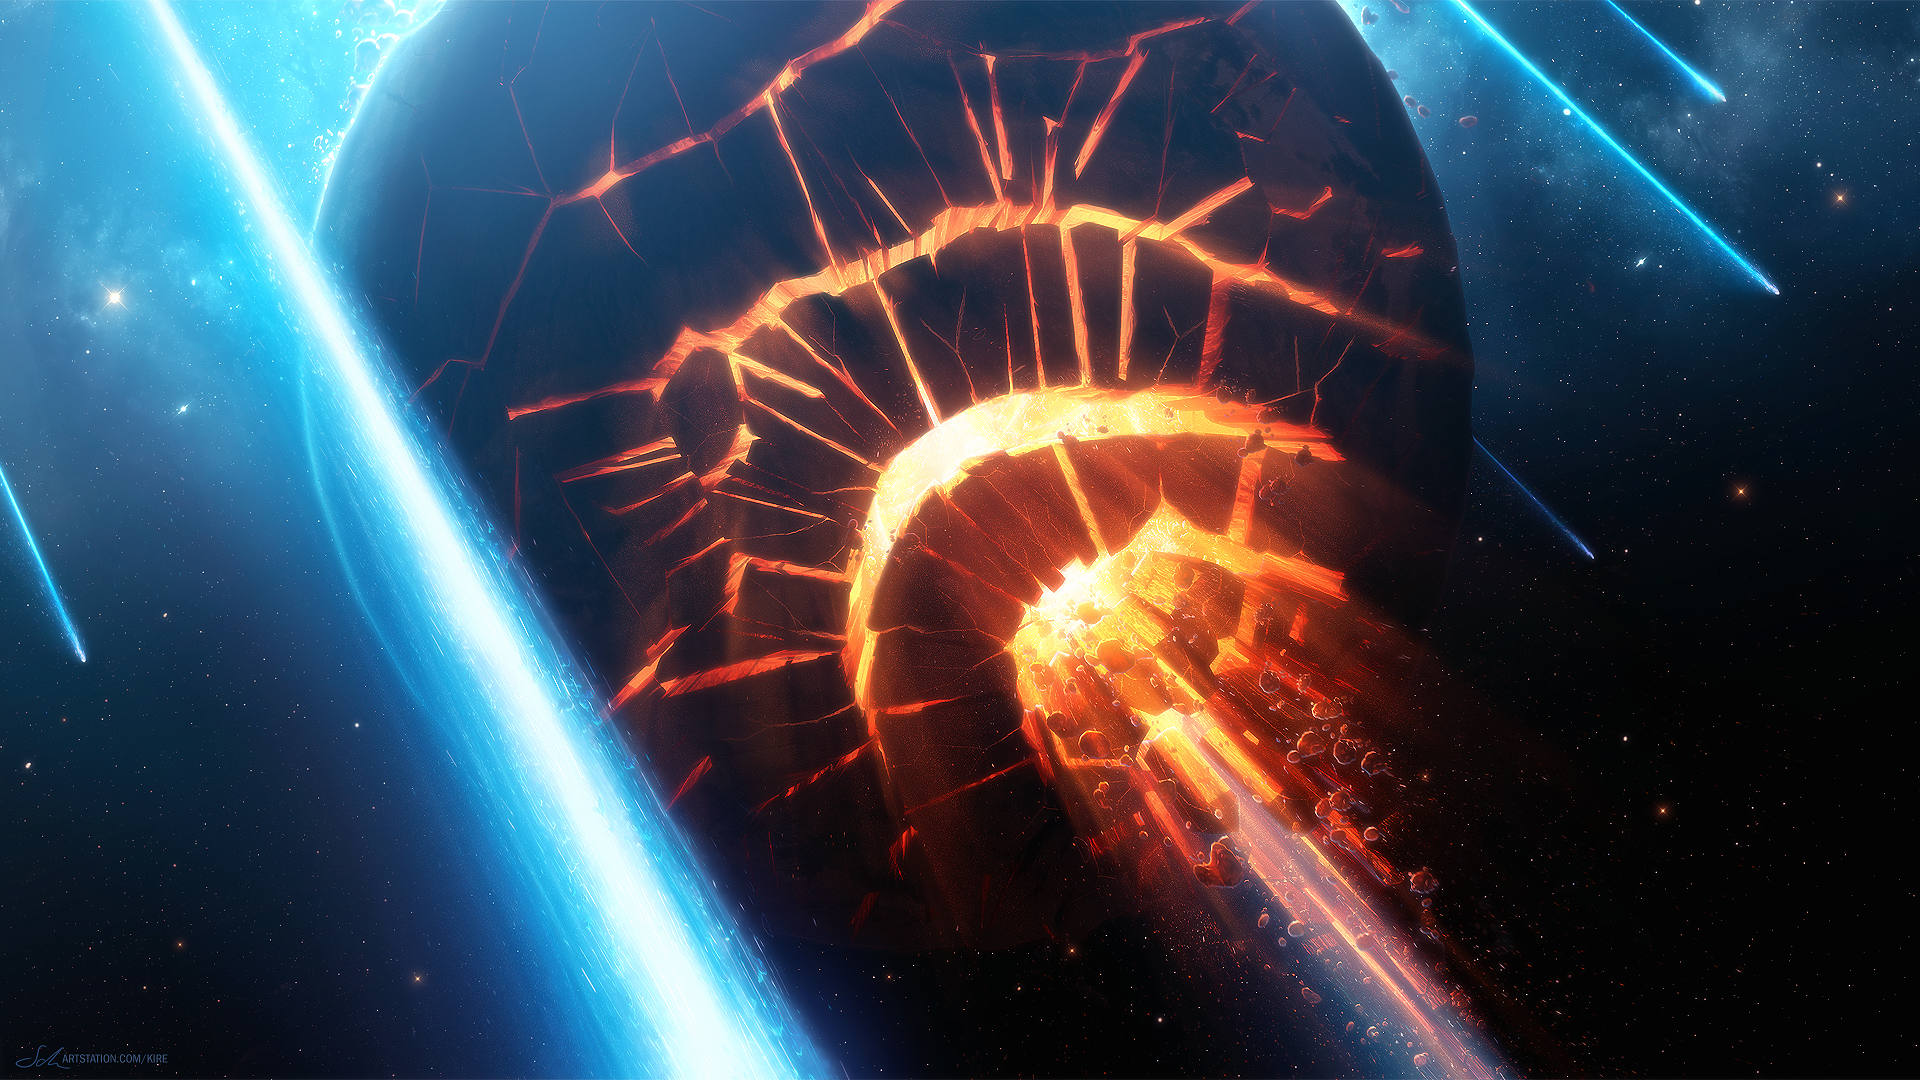 Erik Shoemaker Digital Art Artwork Planet Space Explosion Destruction Fire Stars 1920x1080